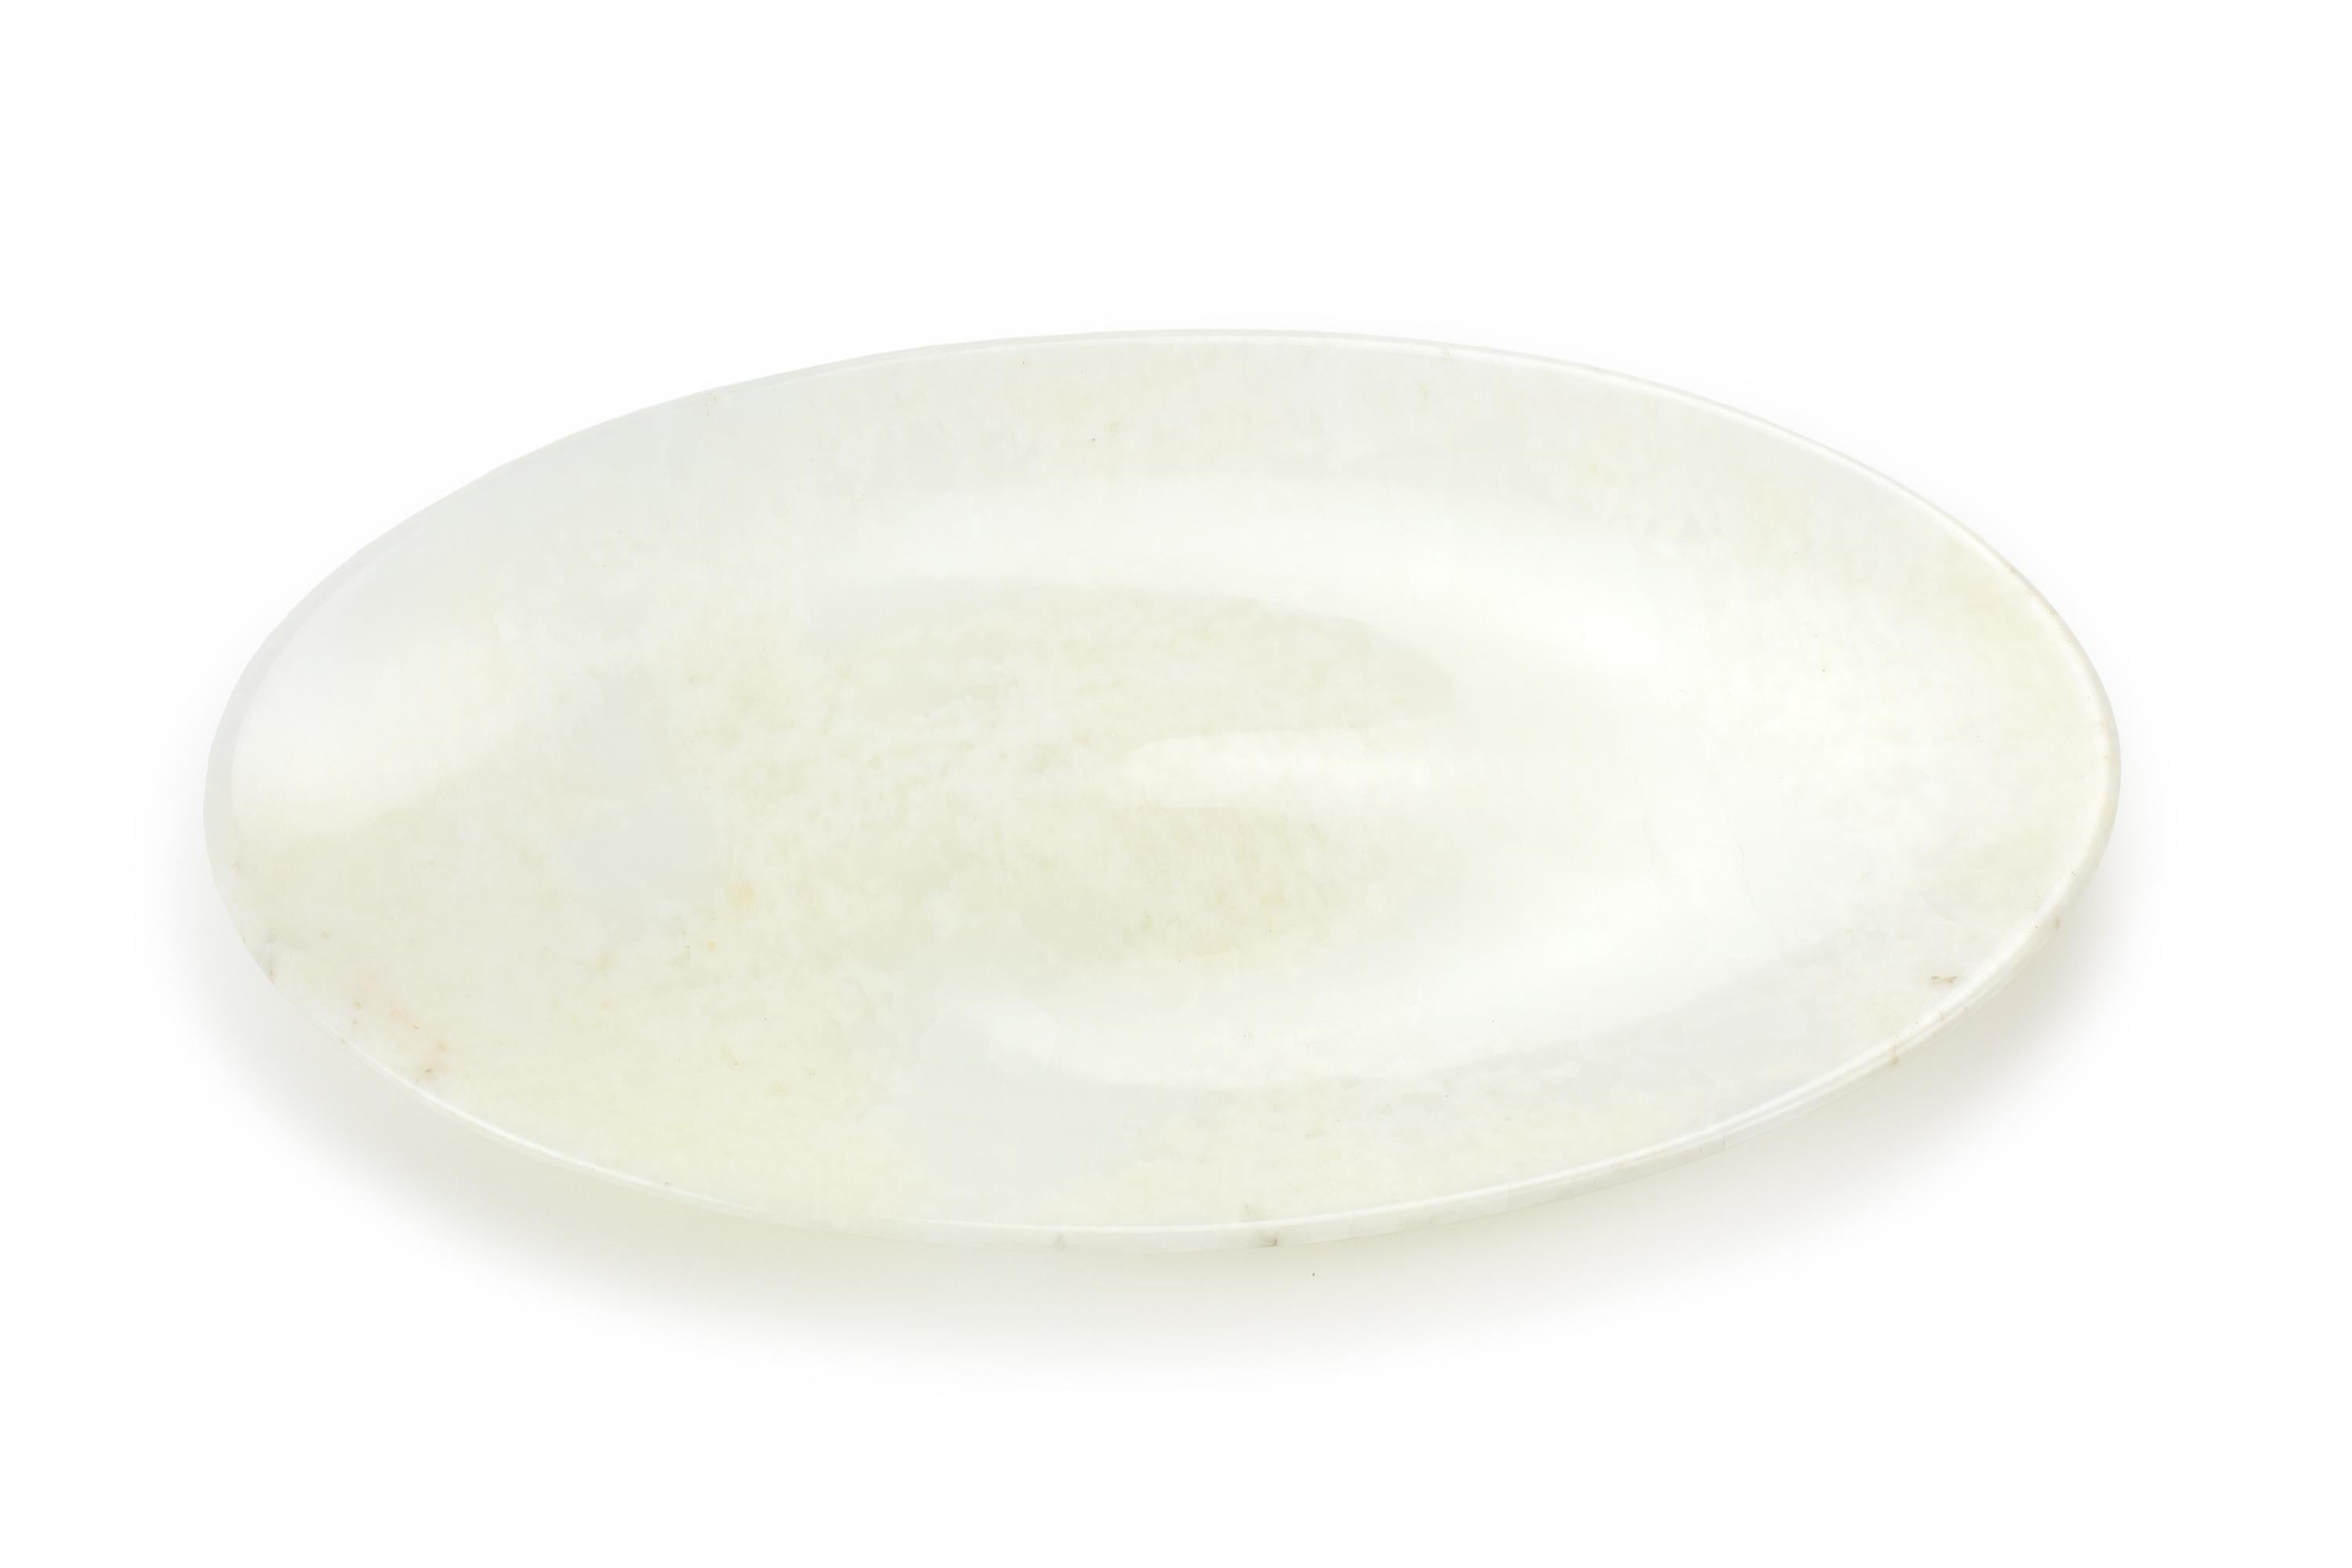 Modern Decorative Bowl Centerpiece Vessel Sculpture White Onyx Marble Contemporary For Sale